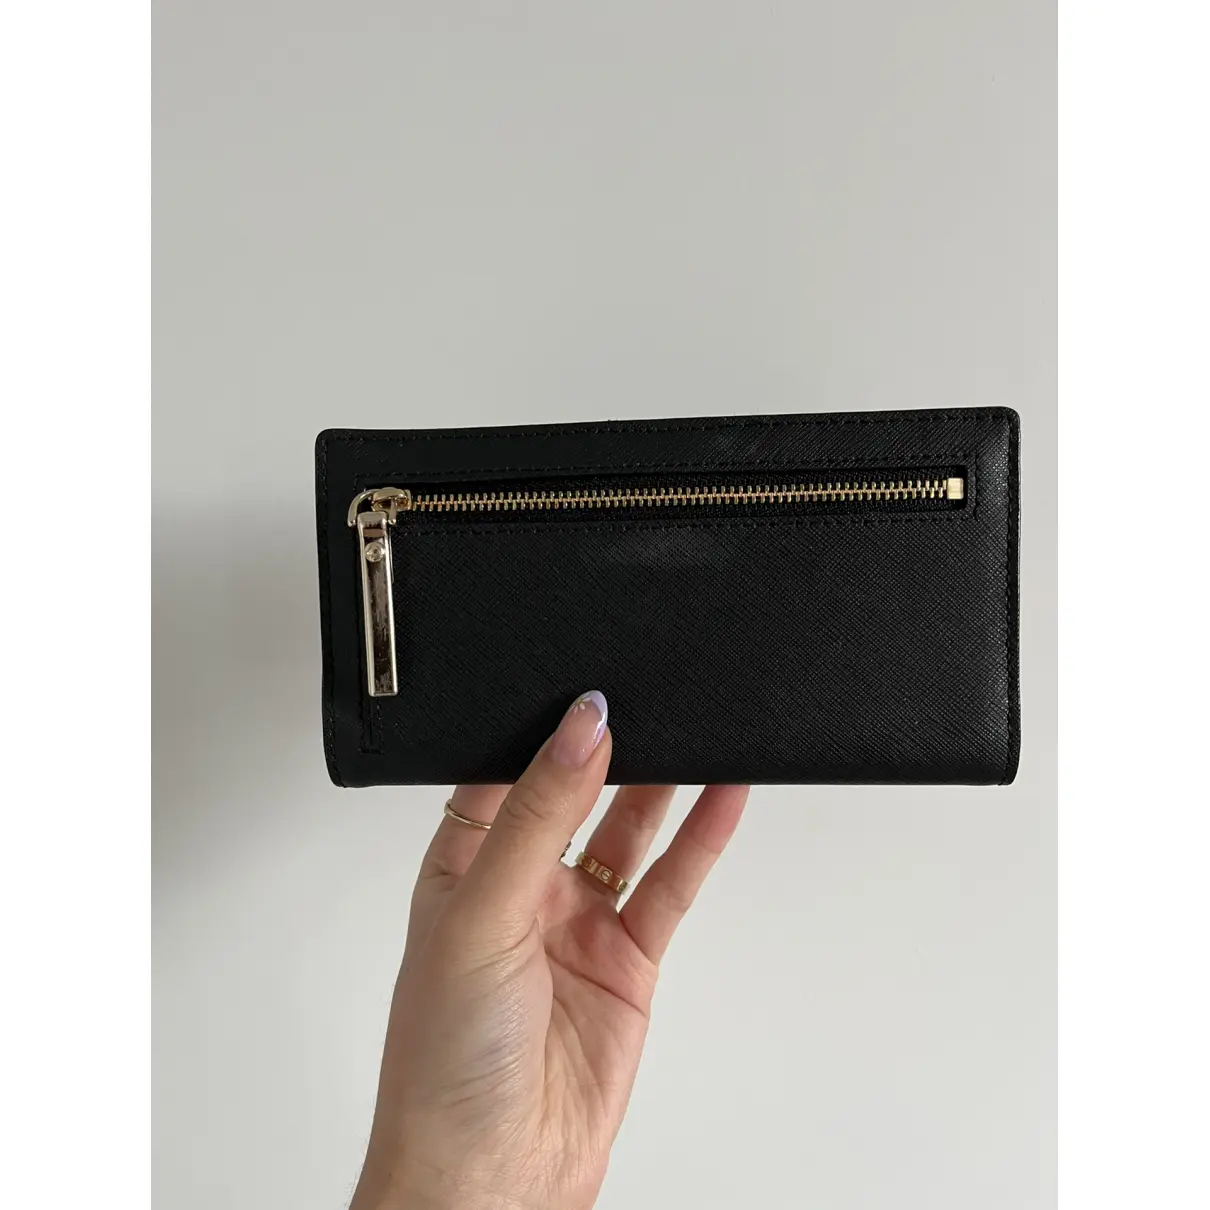 Buy Kate Spade Leather wallet online